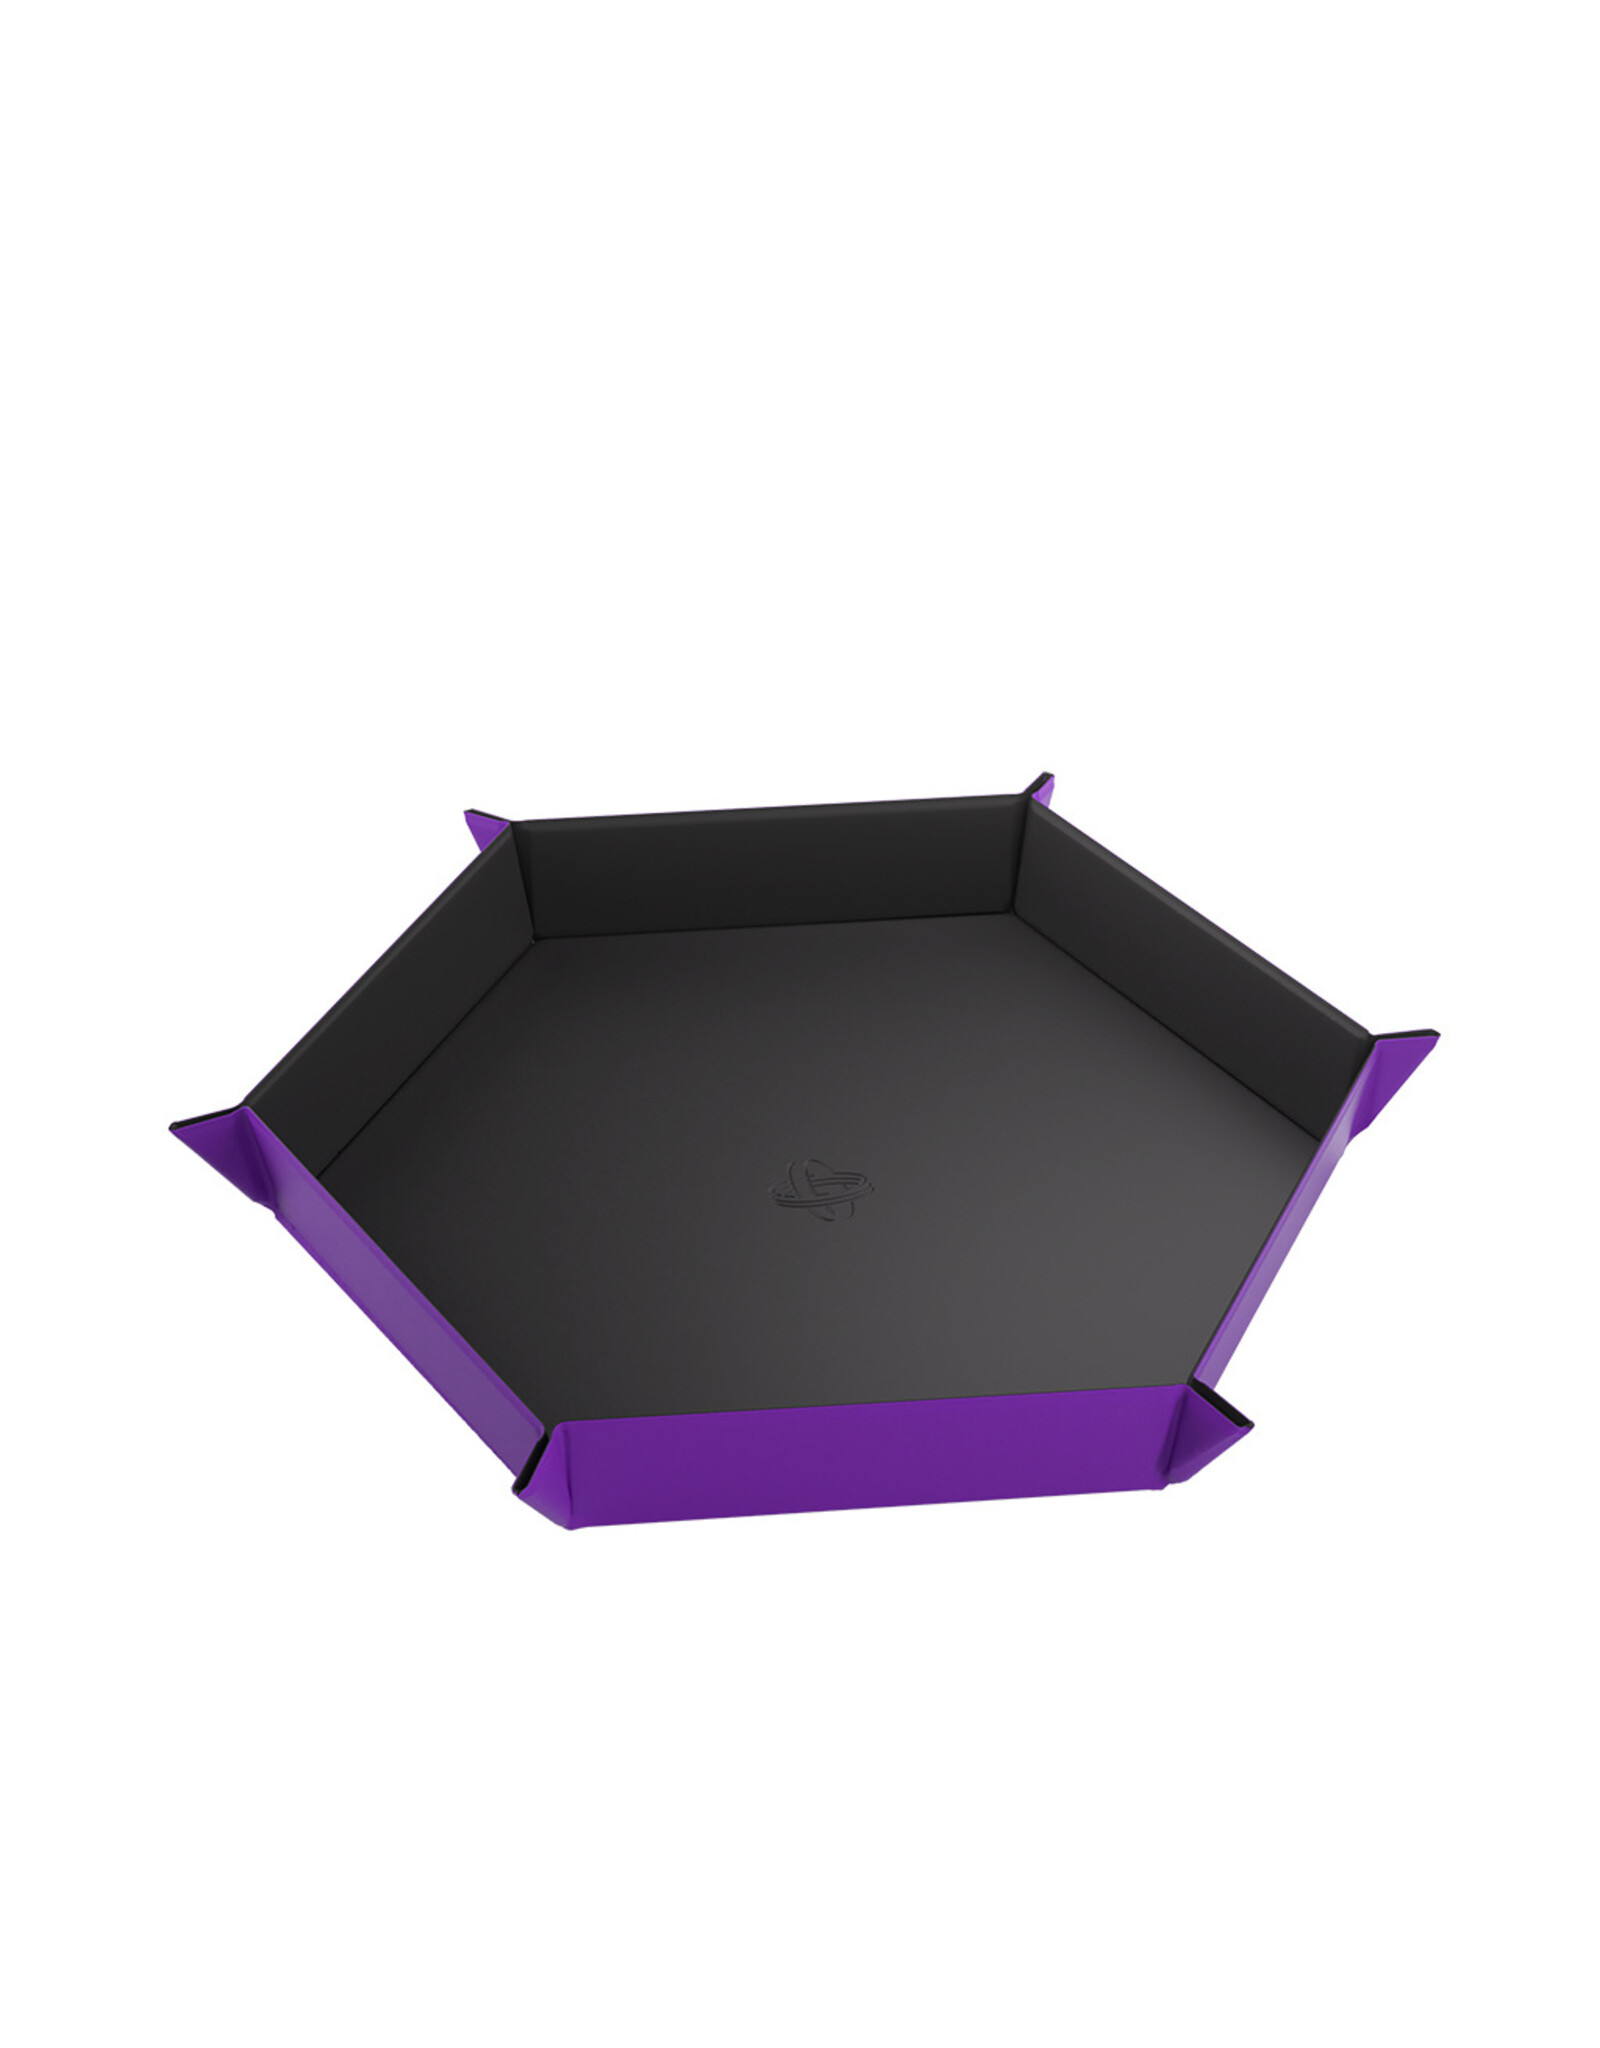 GameGenic Magnetic Dice Tray Hexagonal Black/Purple